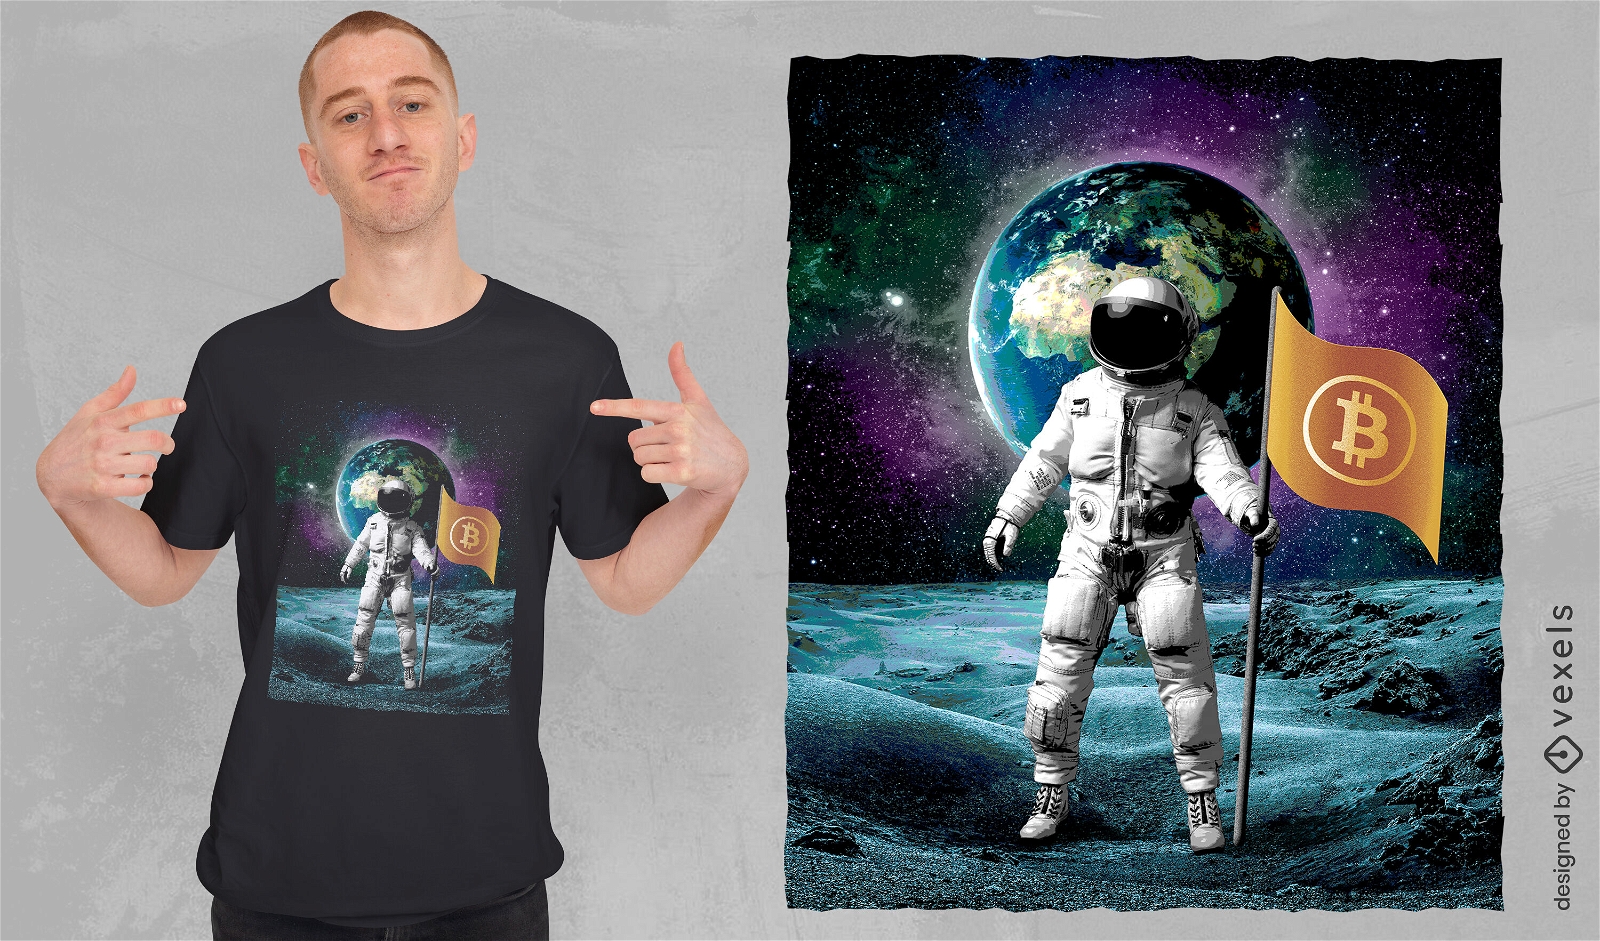 Astronauta com camiseta de bandeira de criptomoeda psd